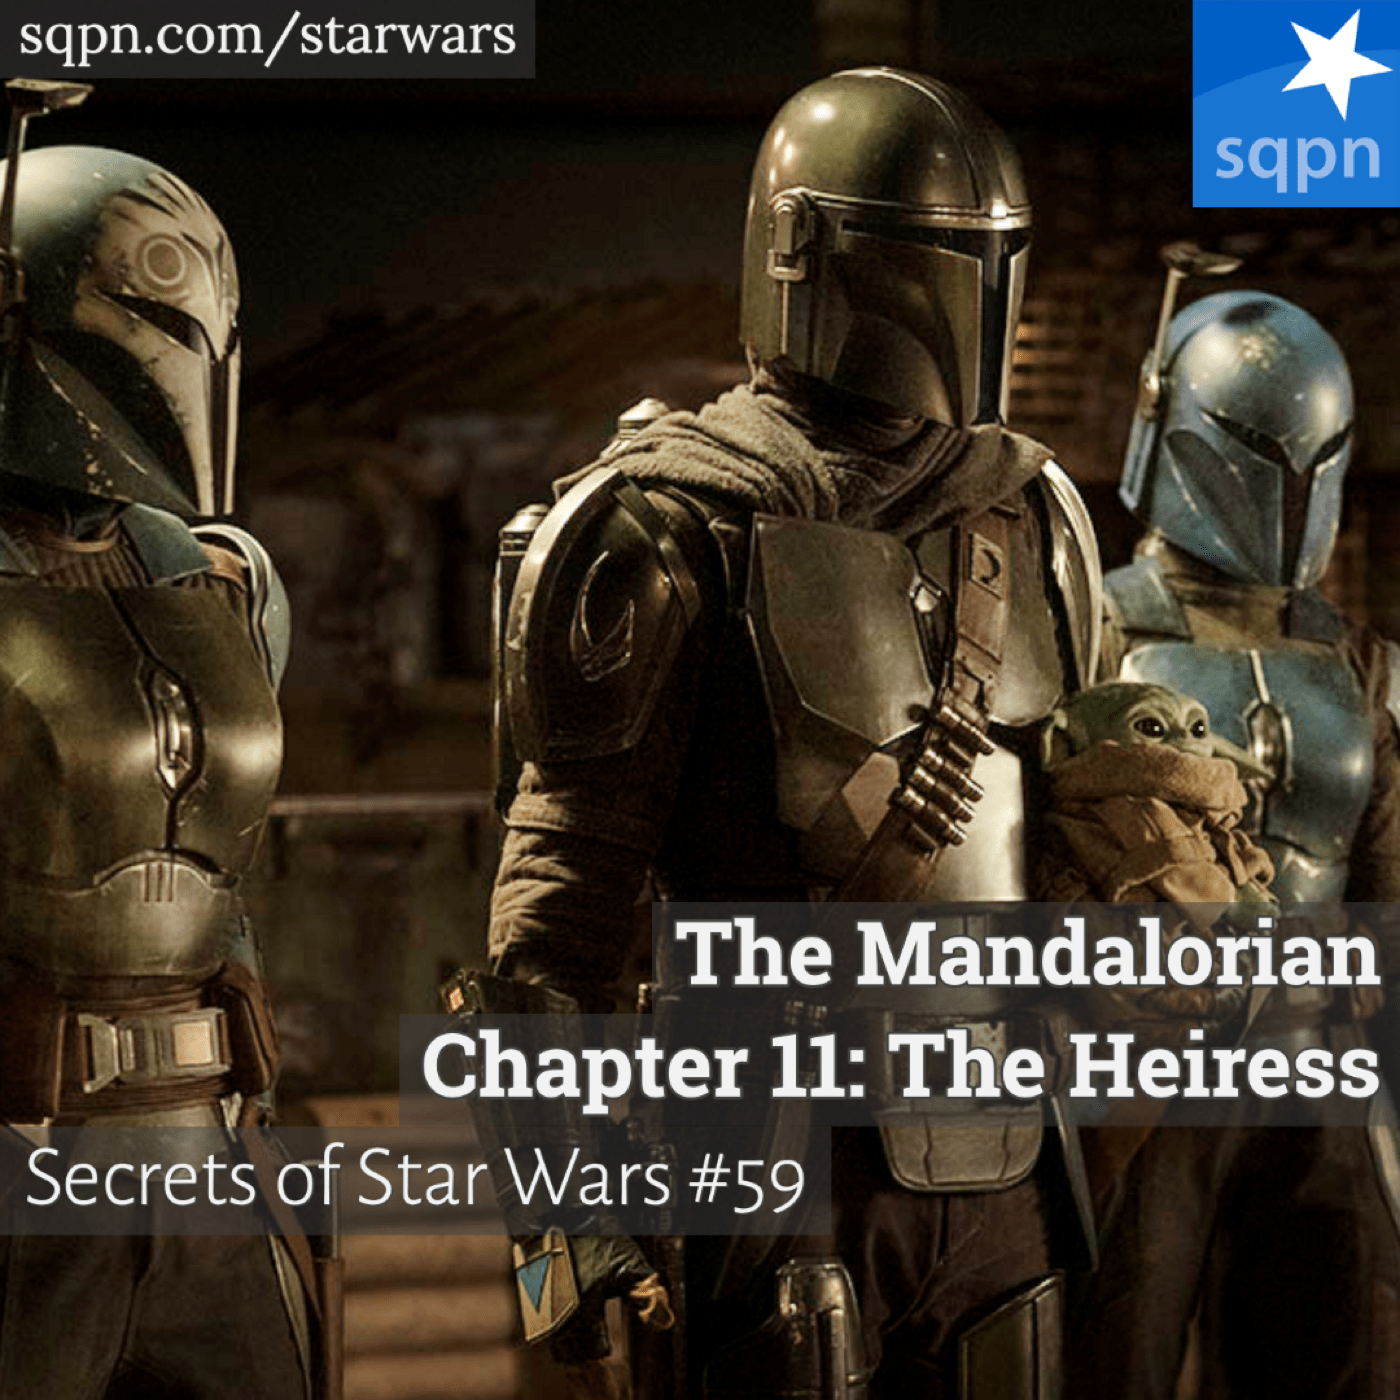 The Mandalorian, Ch. 11: The Heiress